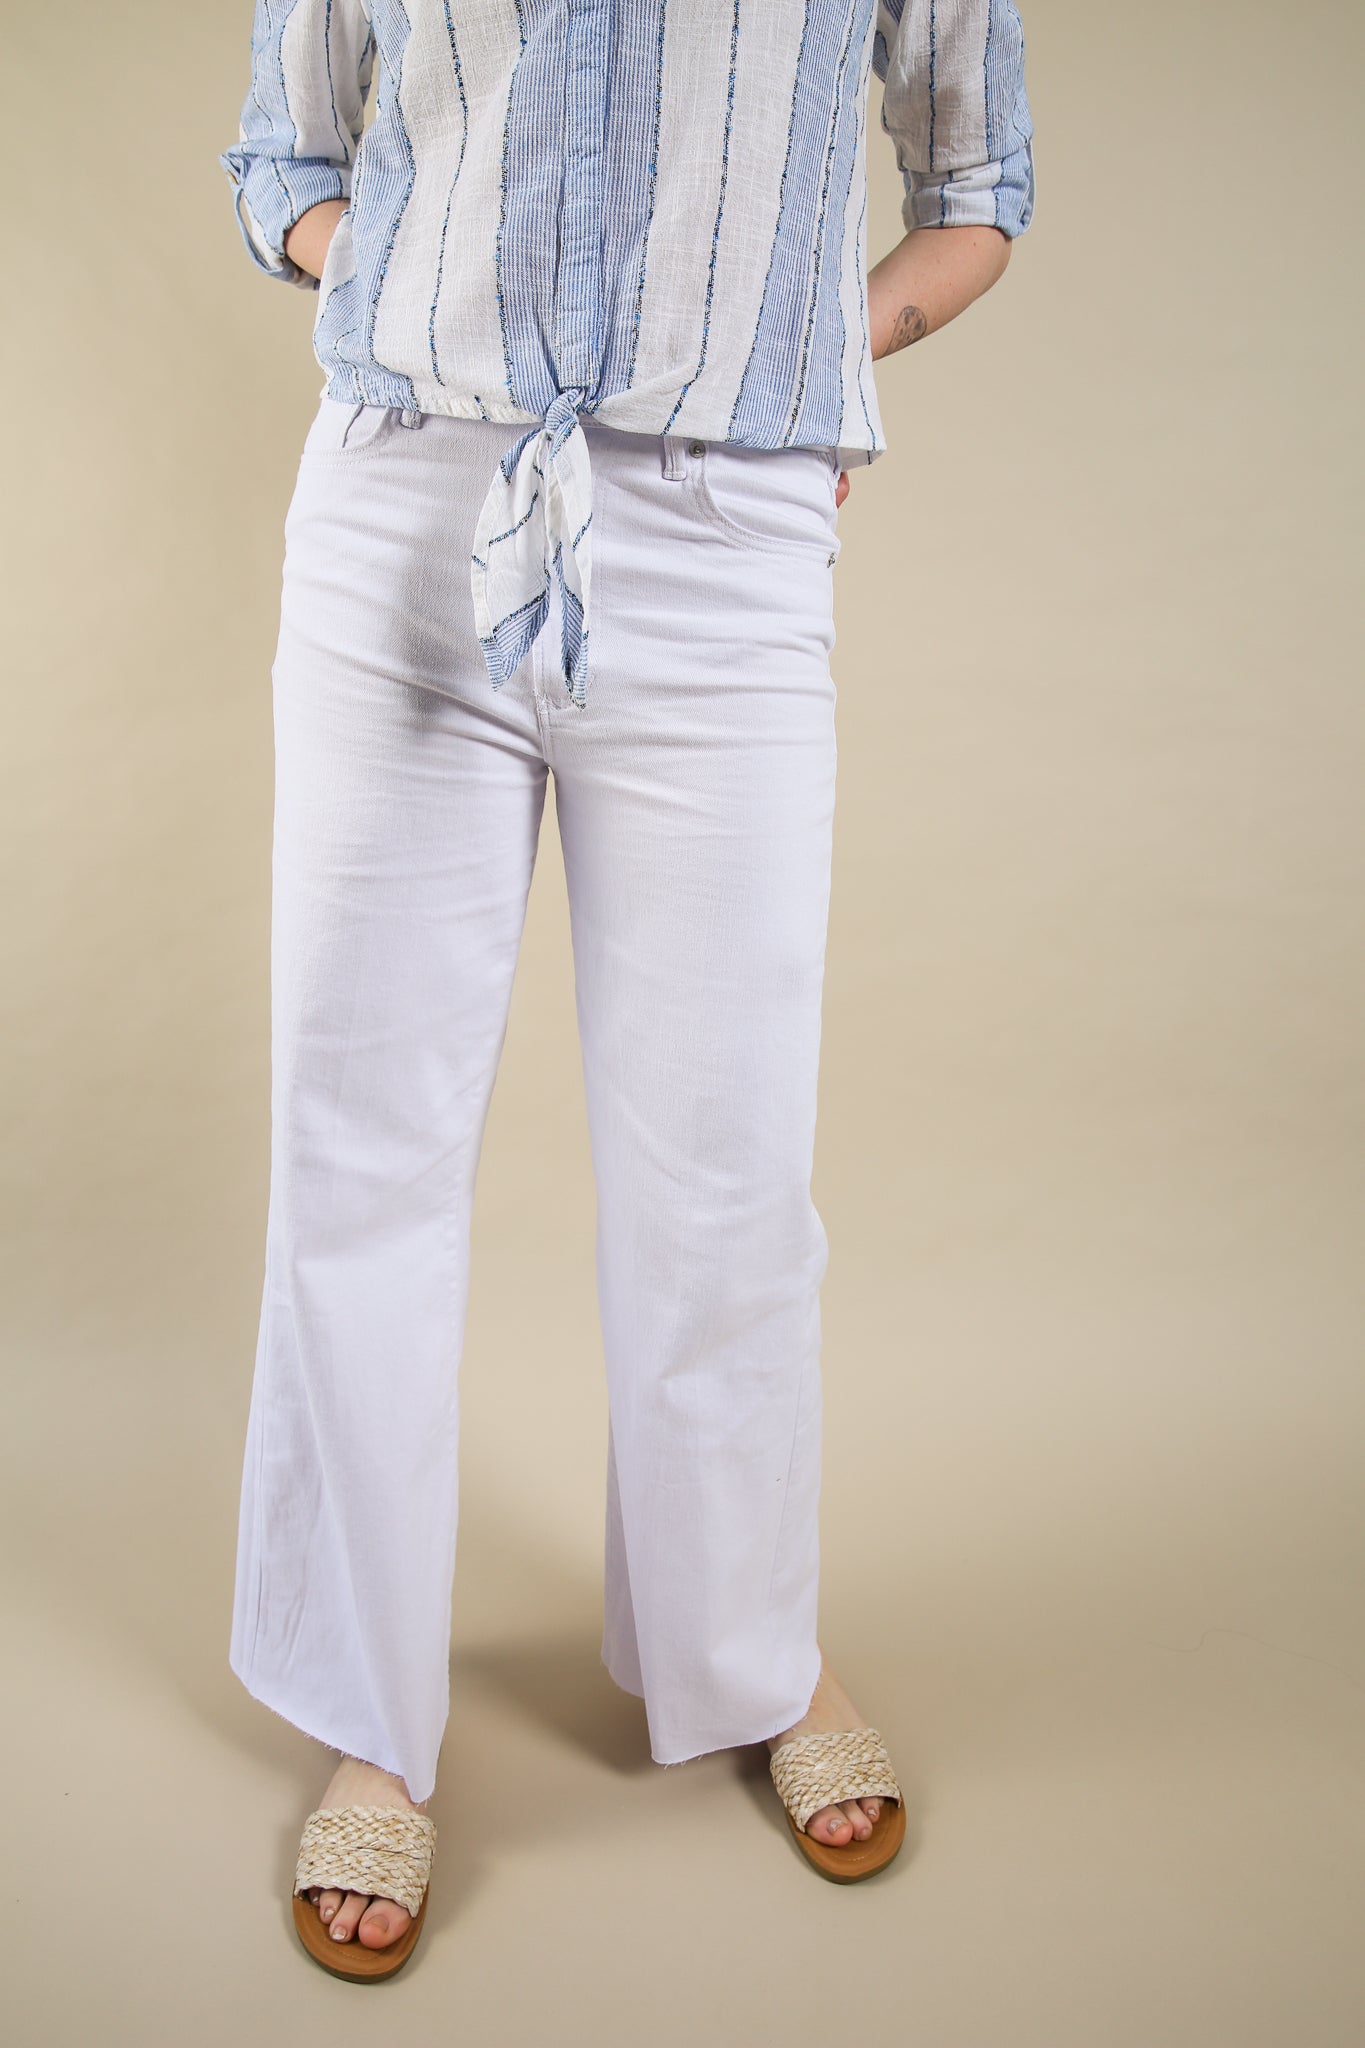 women's white jeans